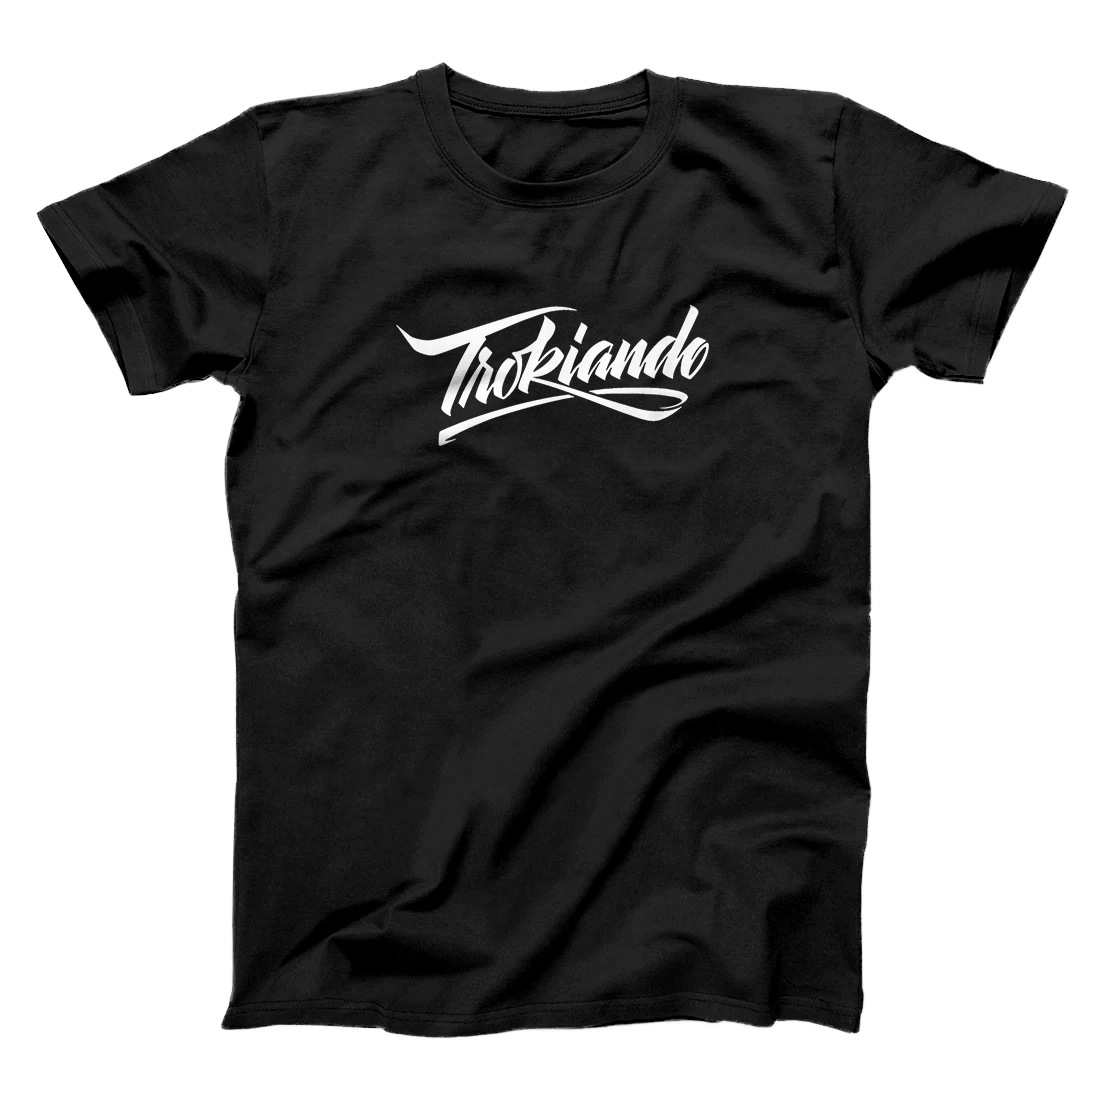 Personalized Trokiando T-Shirt